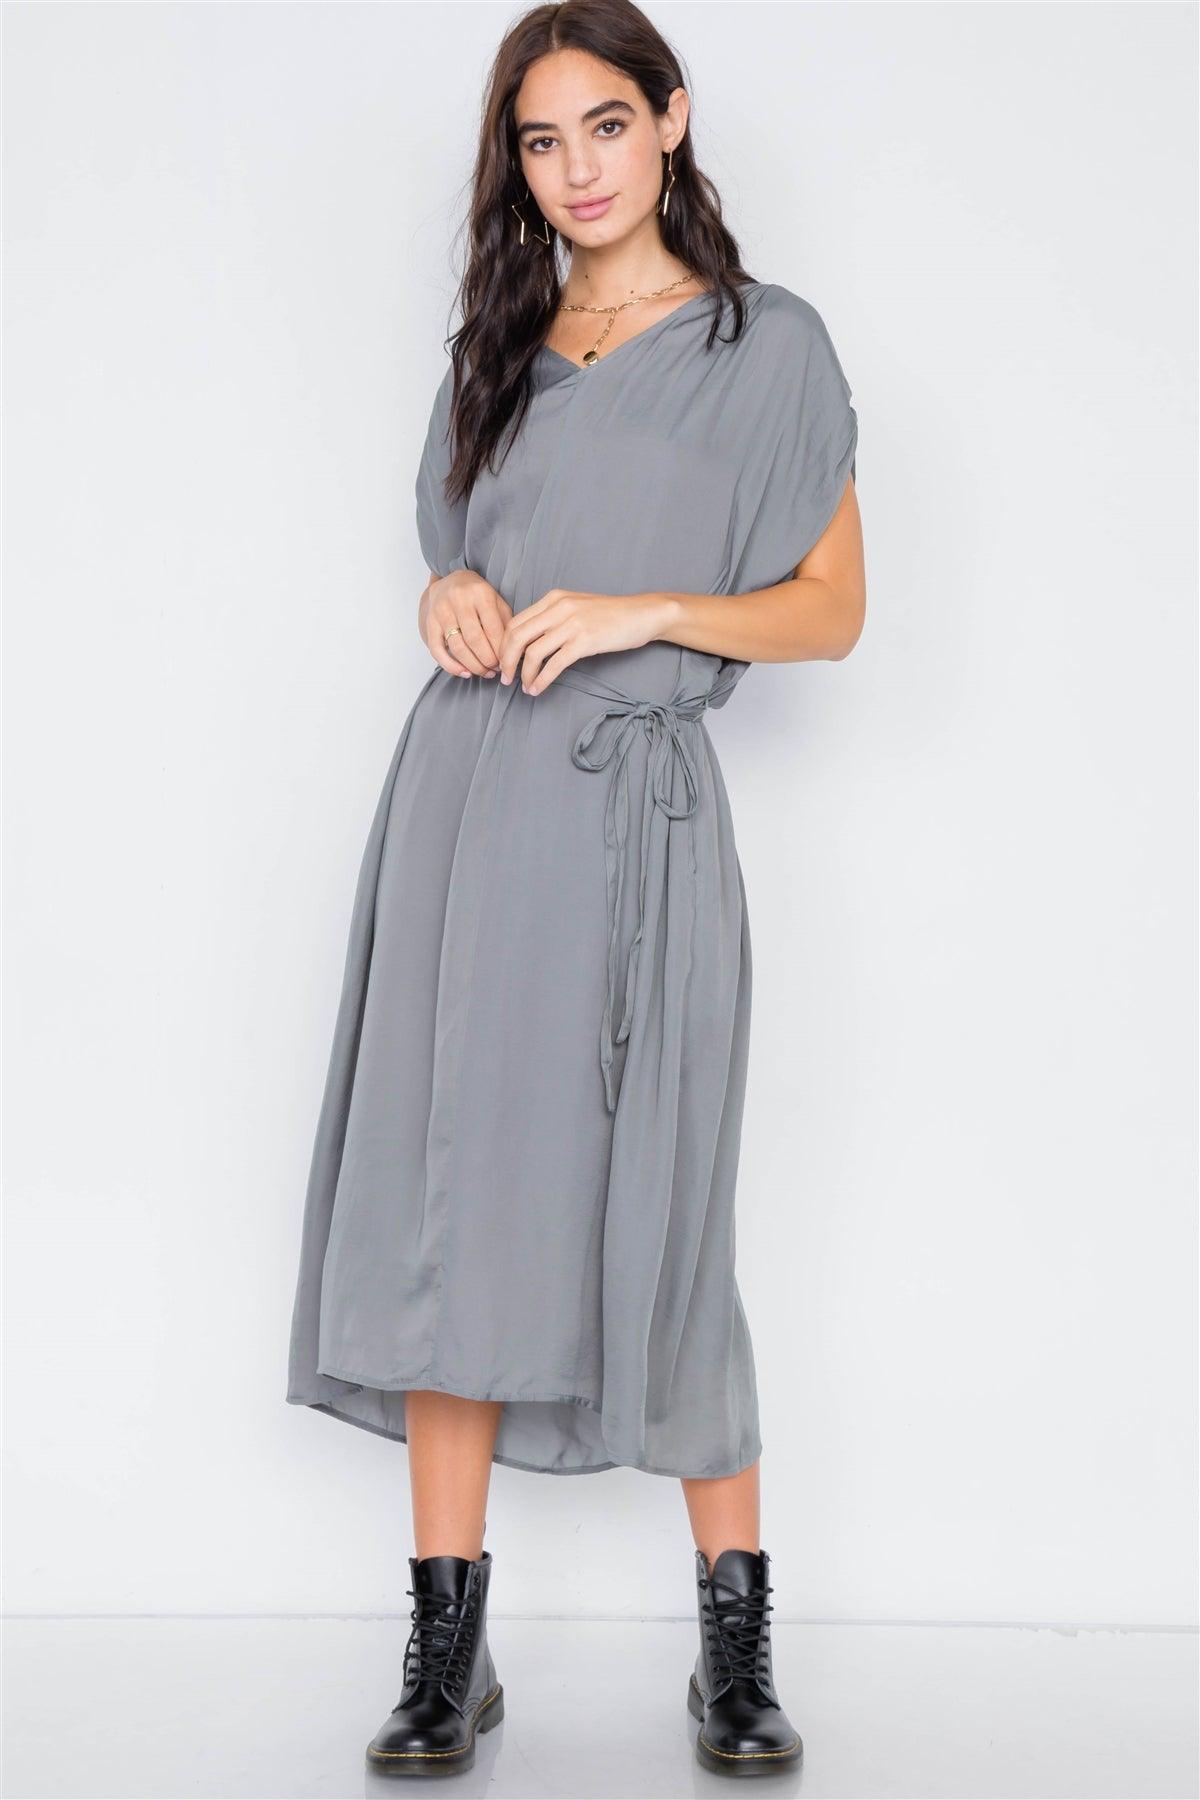 Olive Grey Satin High-Low Midi Dress